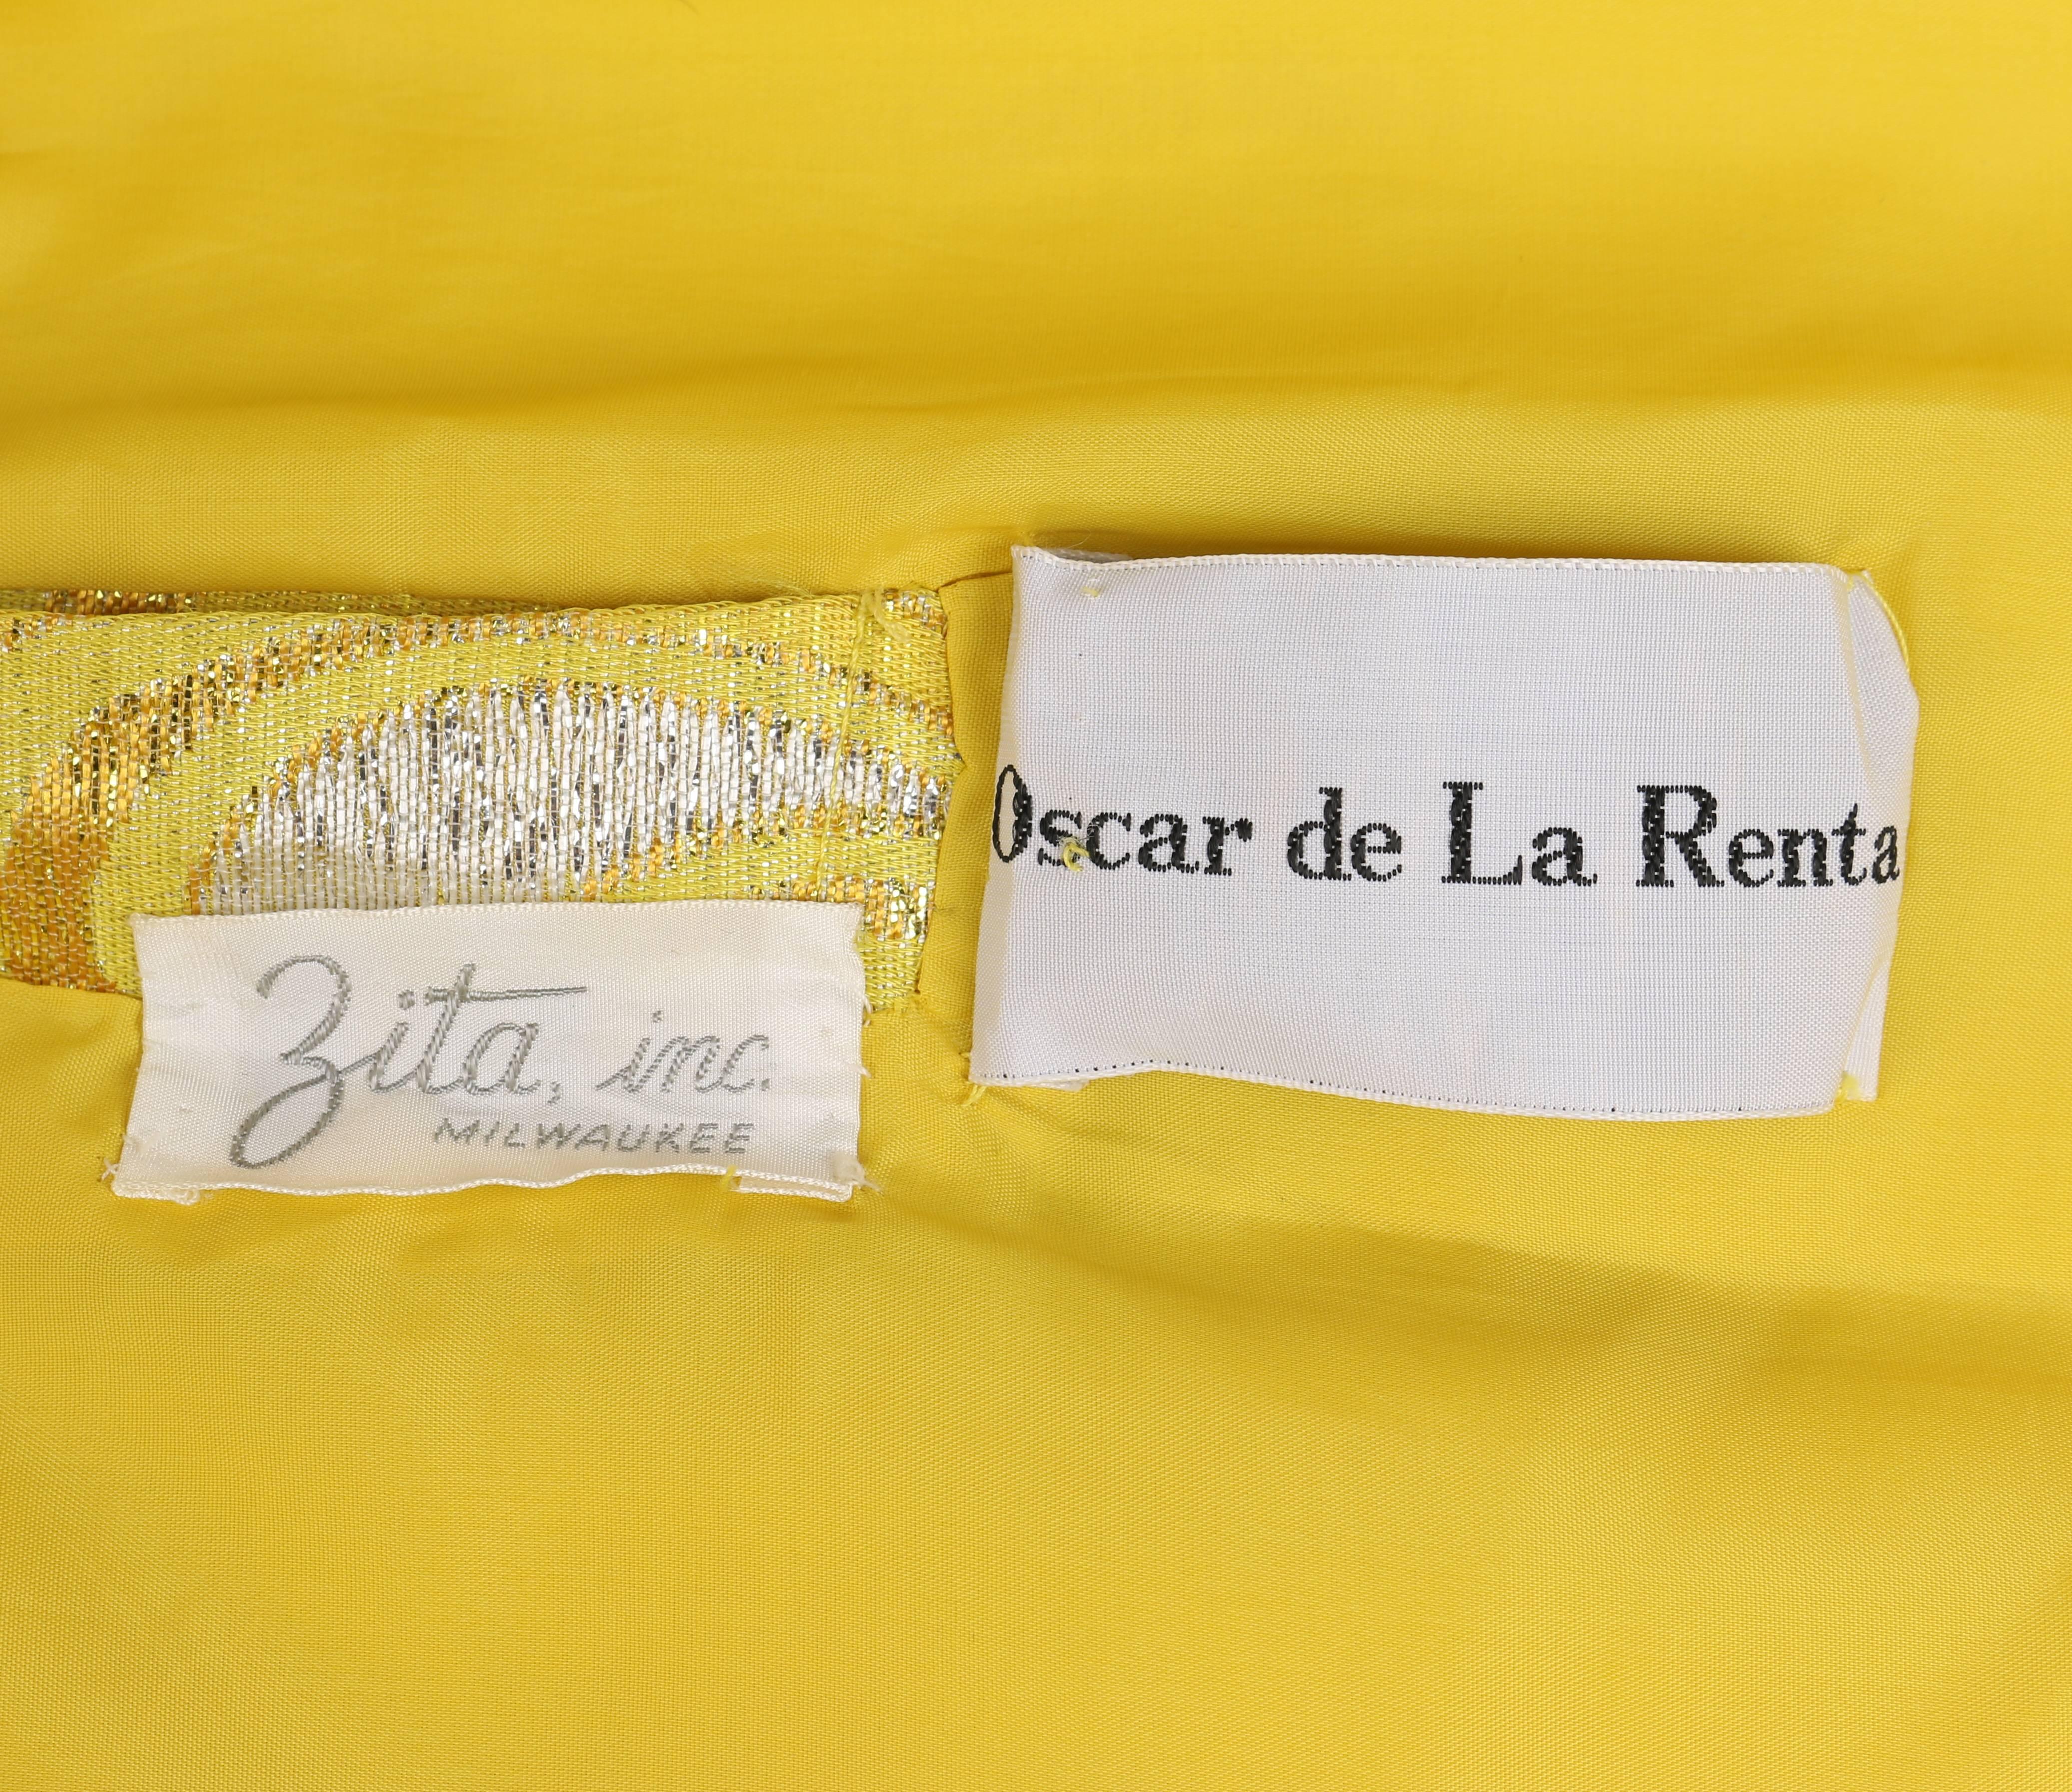 OSCAR de la RENTA c.1968 Yellow Lurex Brocade Silk Beaded Evening Gown Dress 2